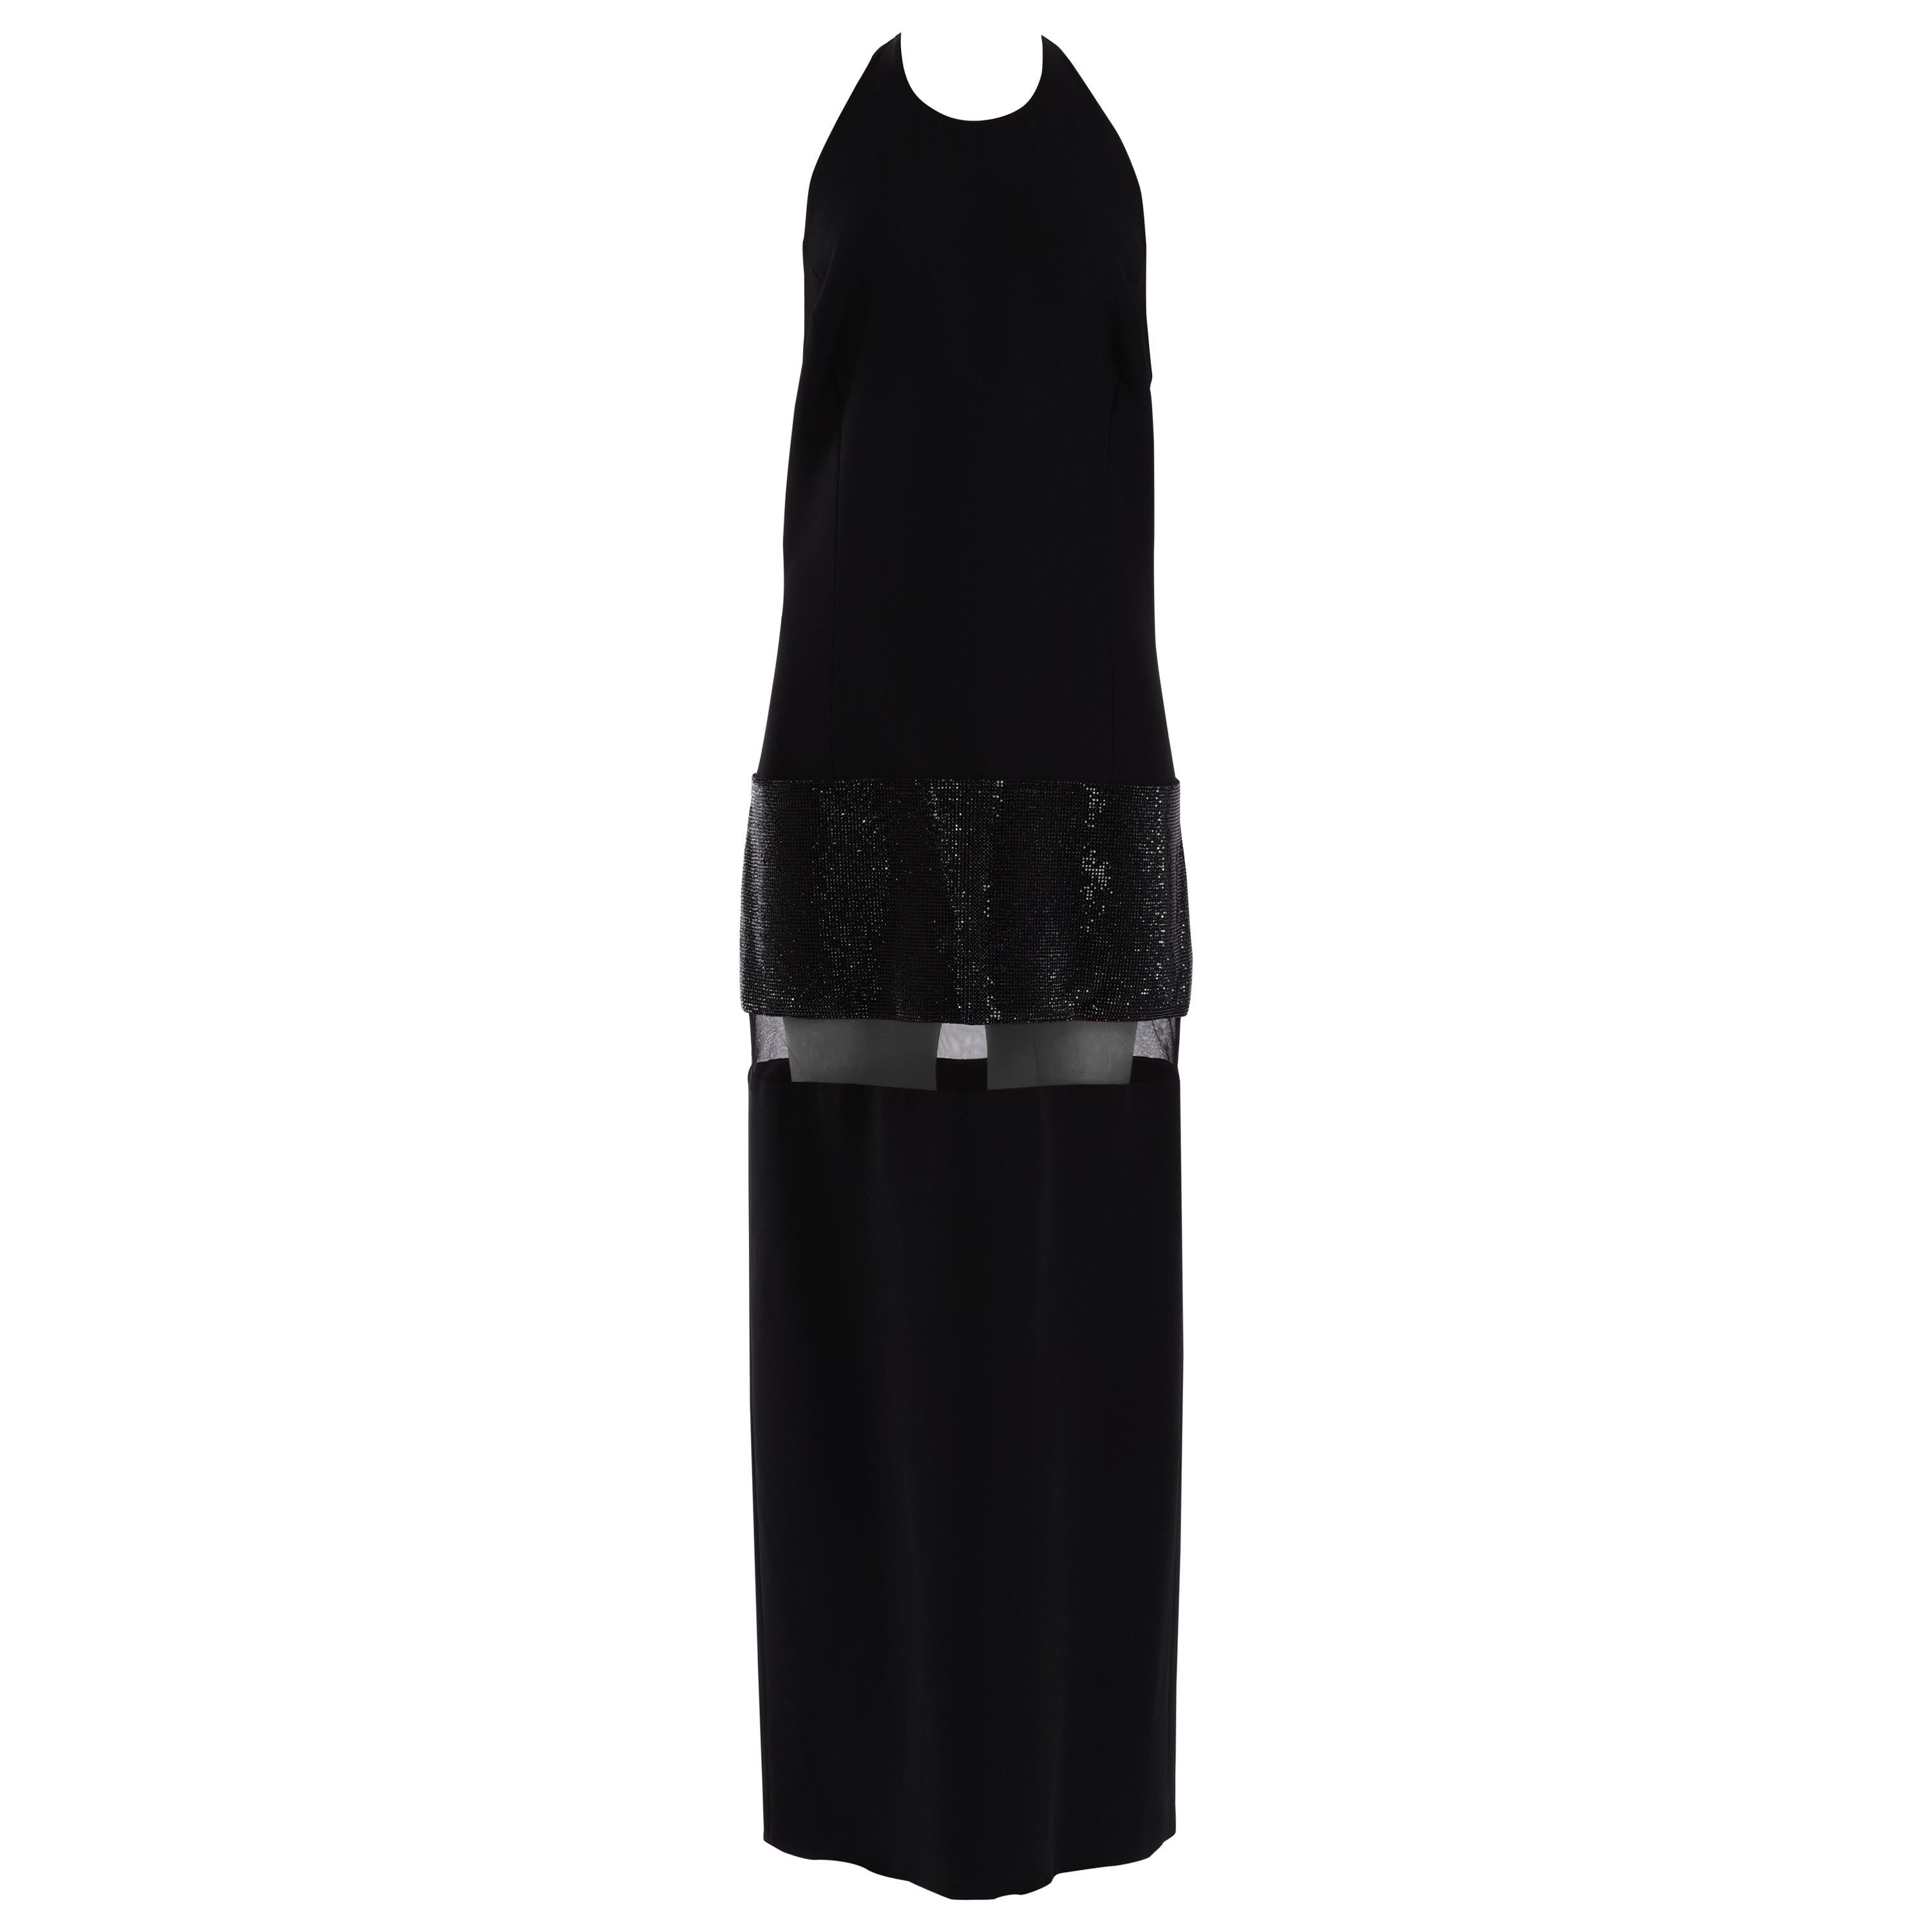 S/S 2015 look # 42 NEW VERSACE CRYSTAL MESH MBELLISHED BLACK LONG DRESS  42 - 6 For Sale